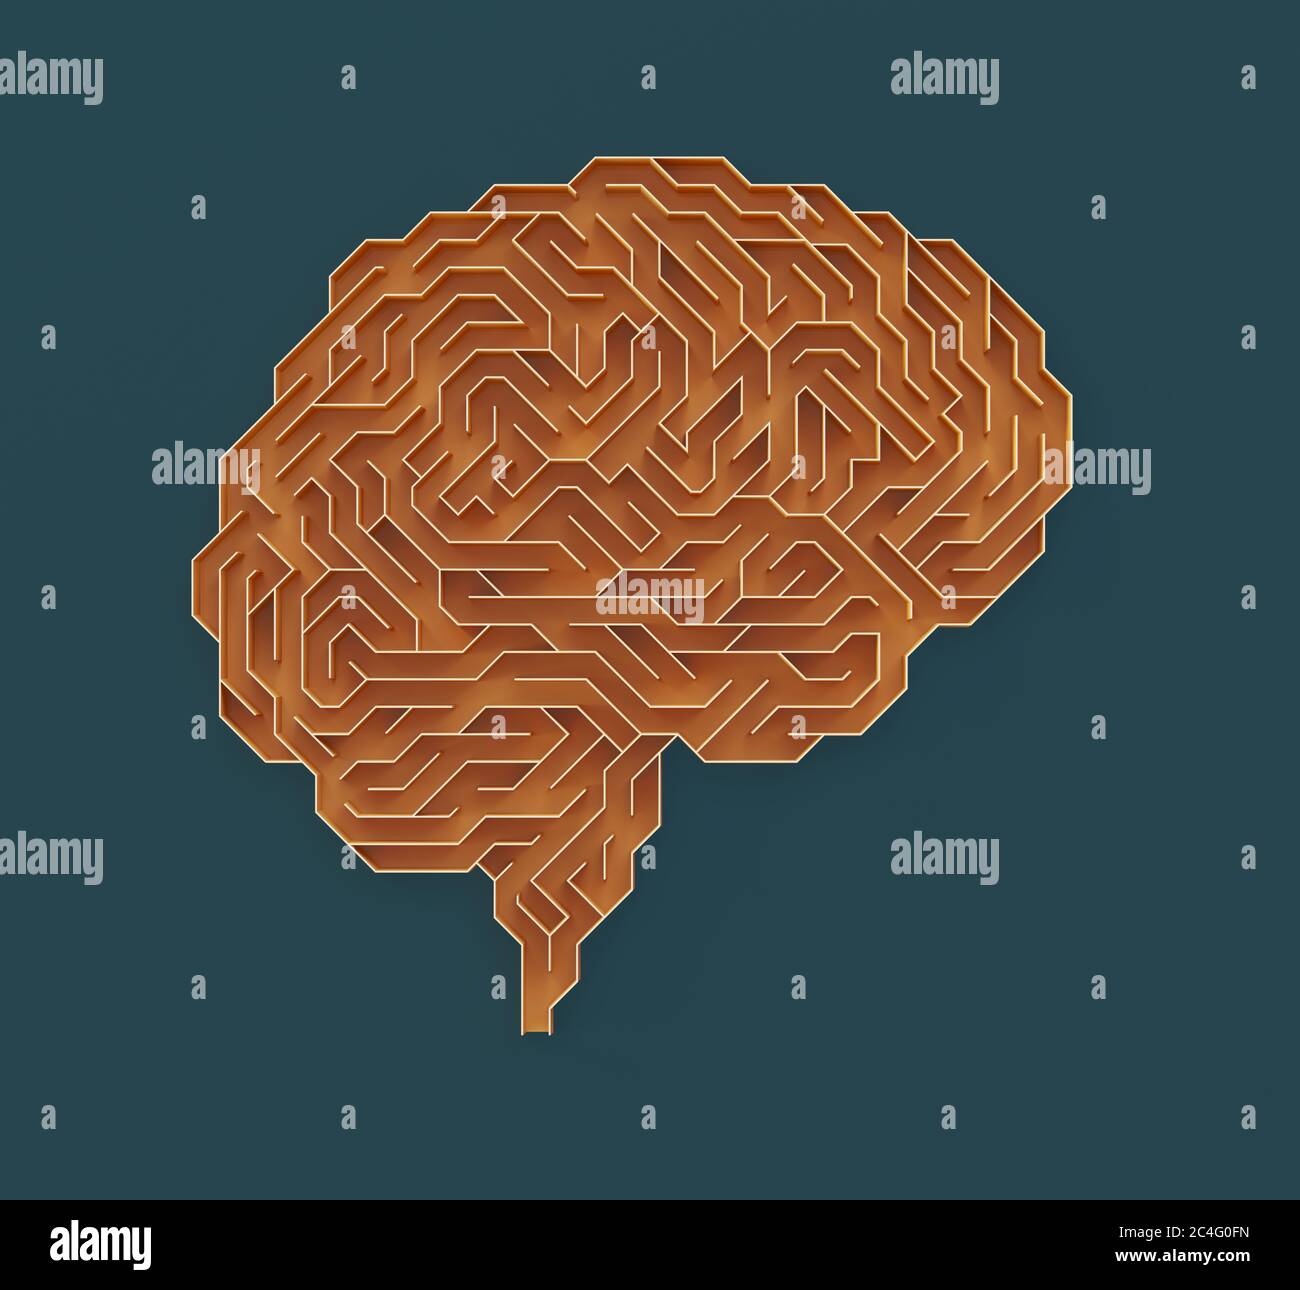 Human brain, conceptual illustration. Stock Photo